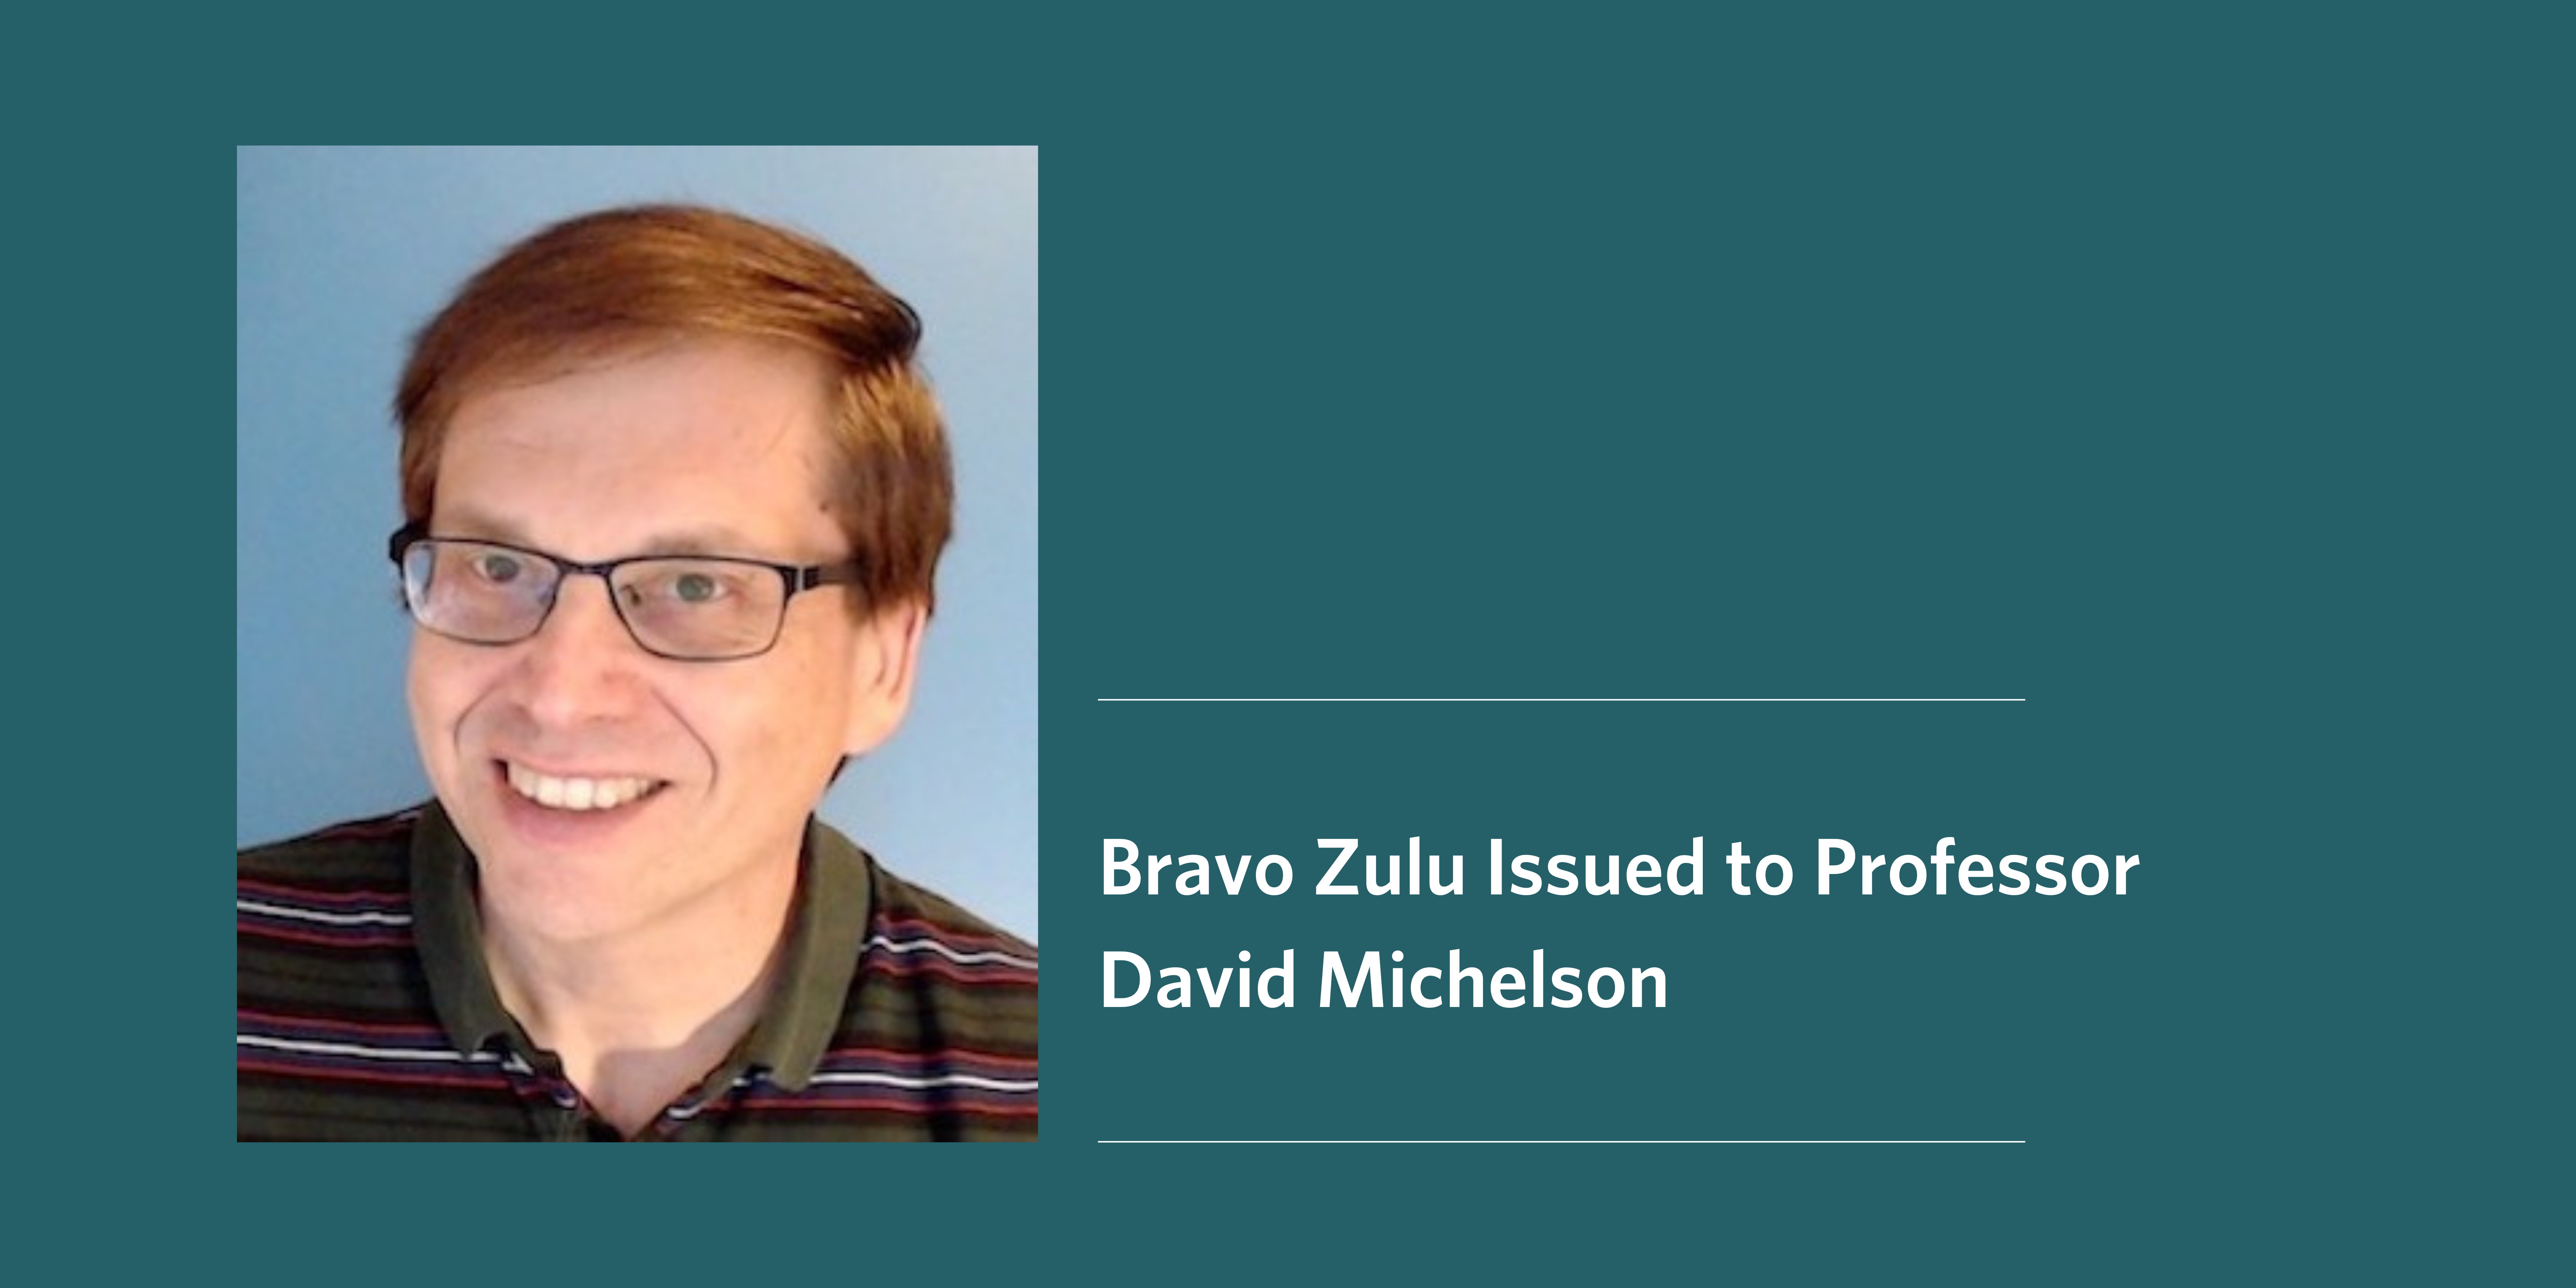 Bravo Zulu issued to Professor David Michelson